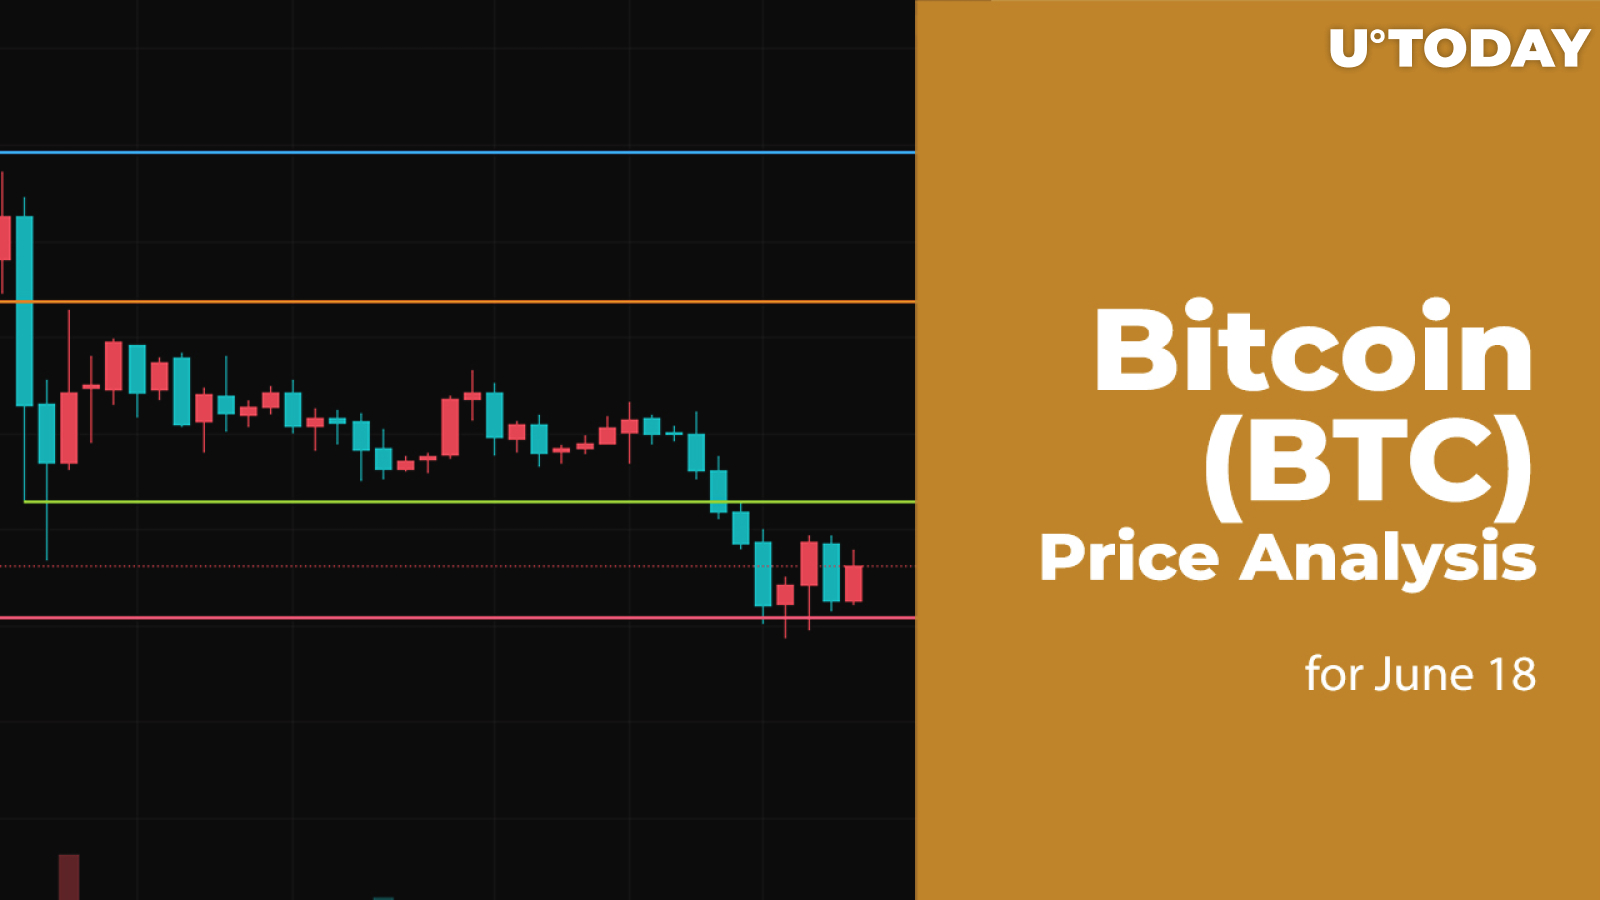 Bitcoin (BTC) Price Analysis for June 18